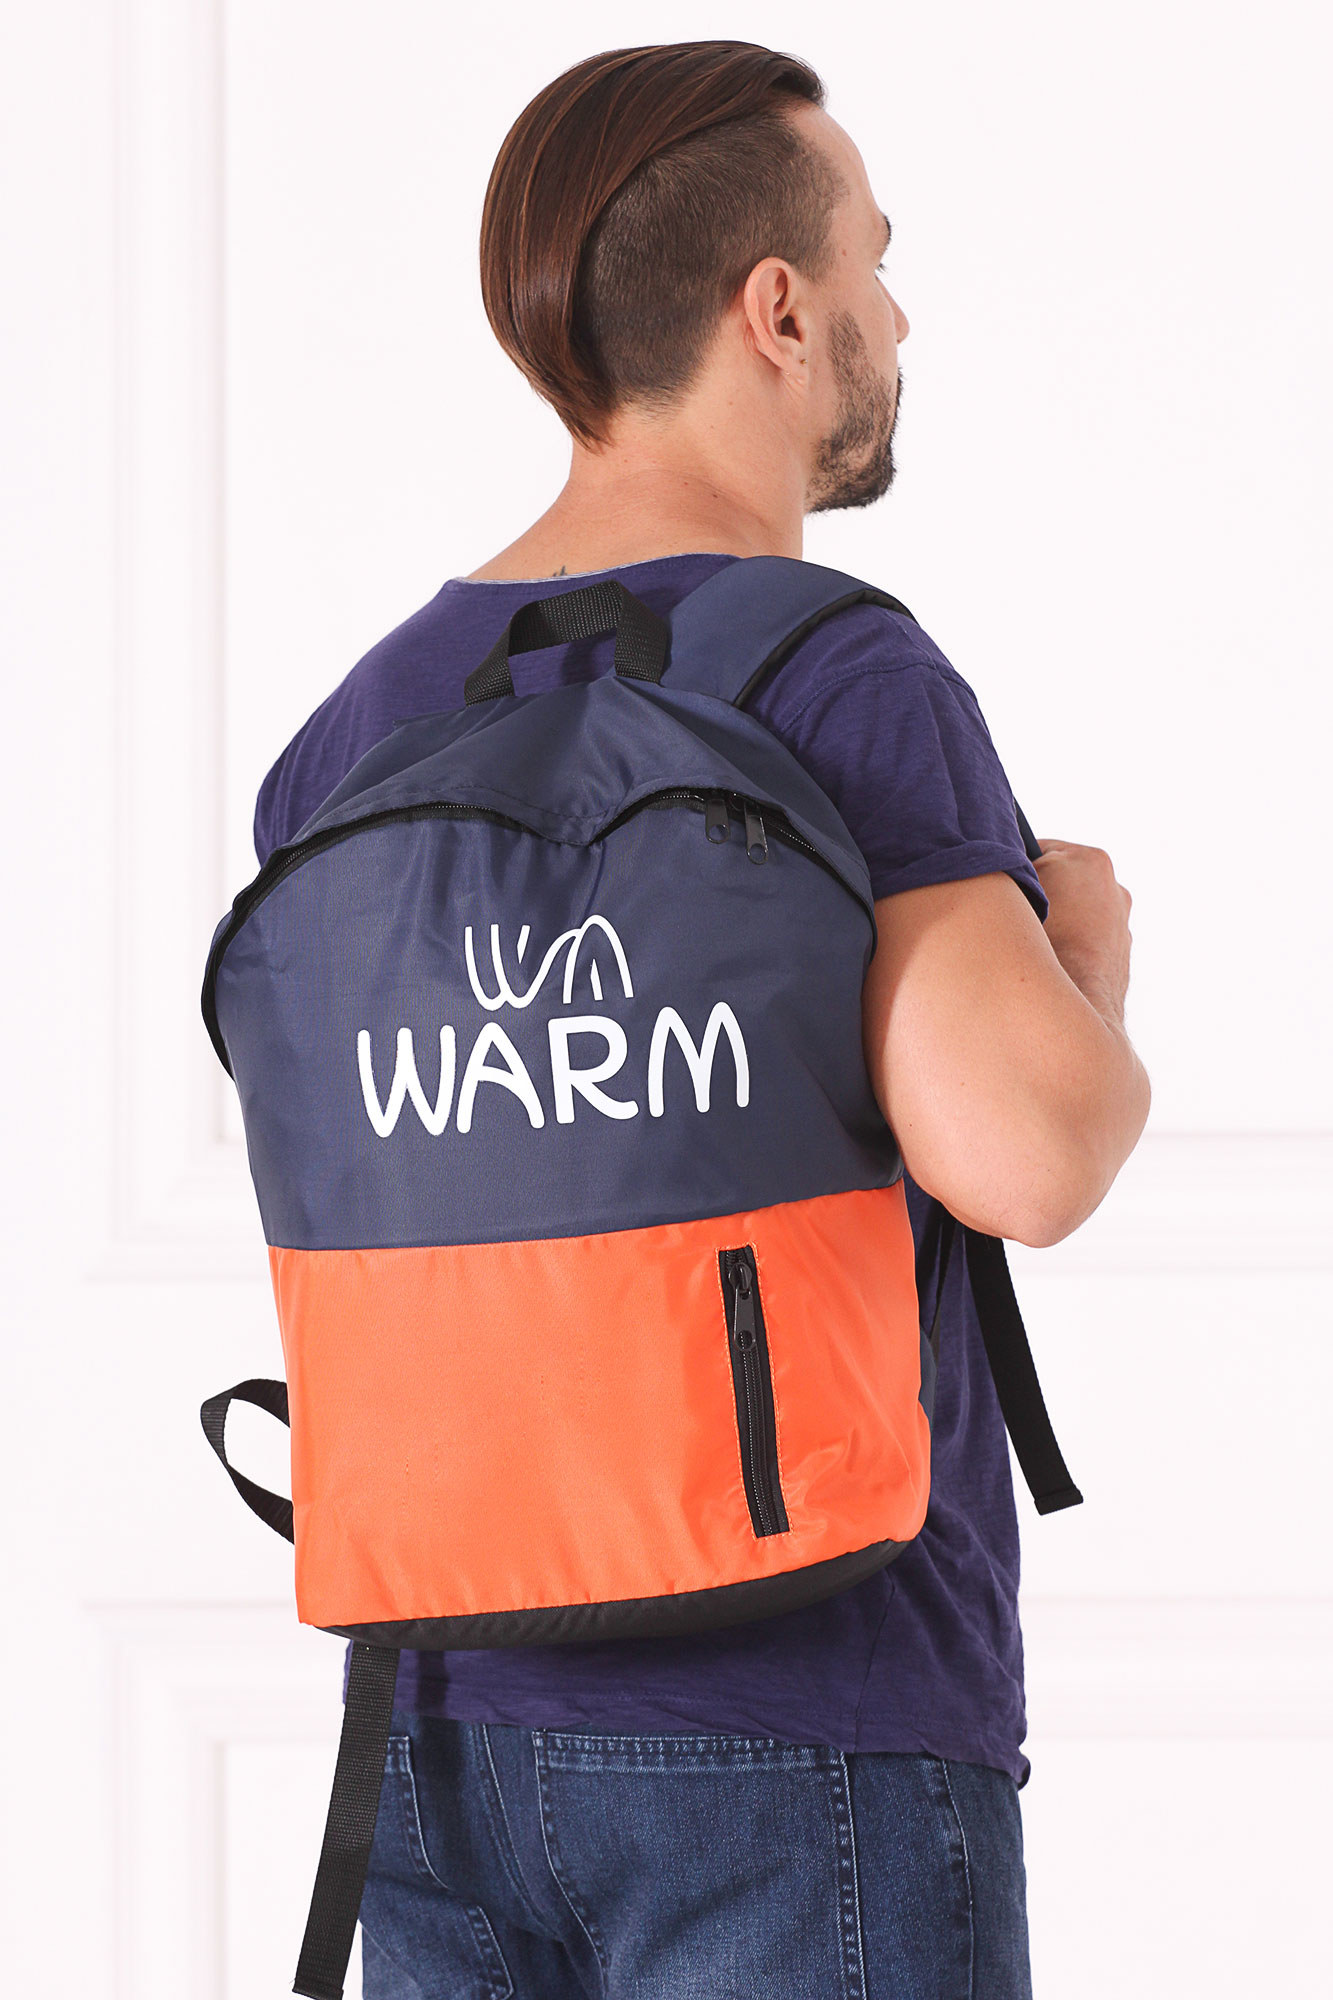 Warm pack